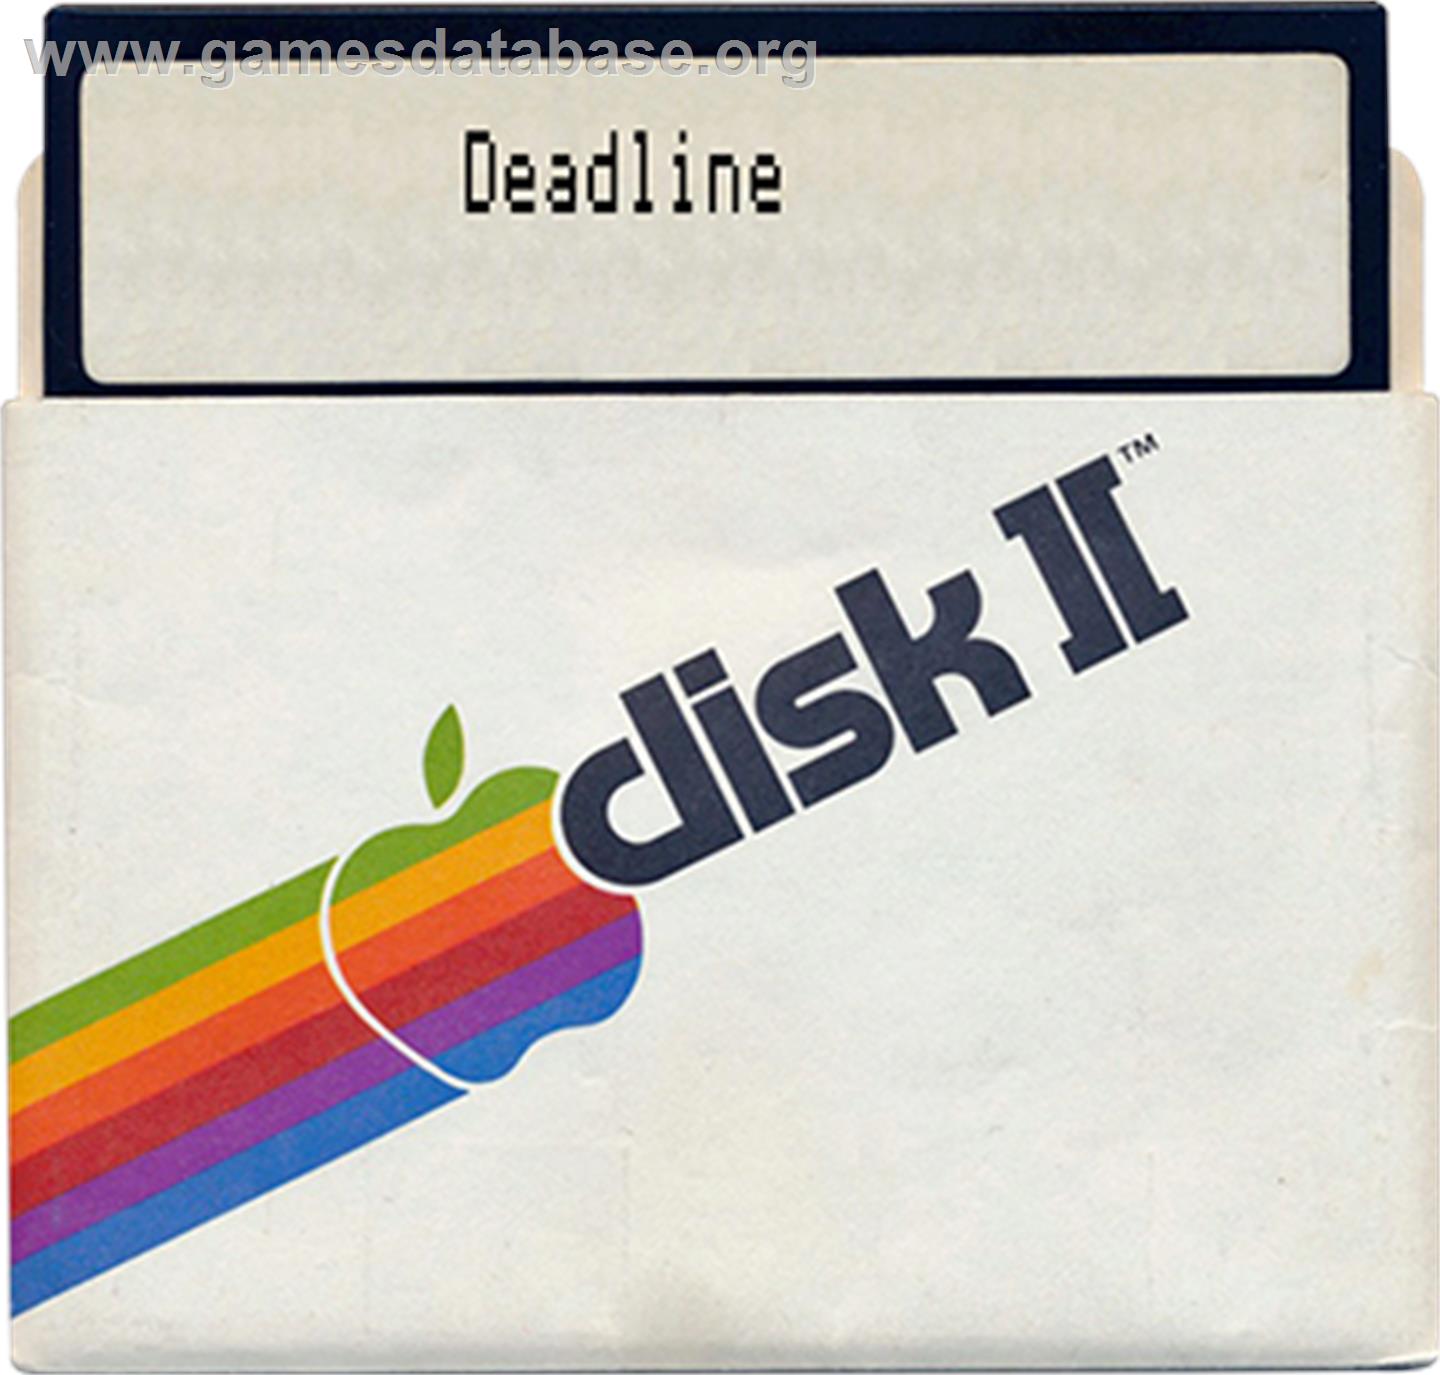 Deadline - Apple II - Artwork - Disc